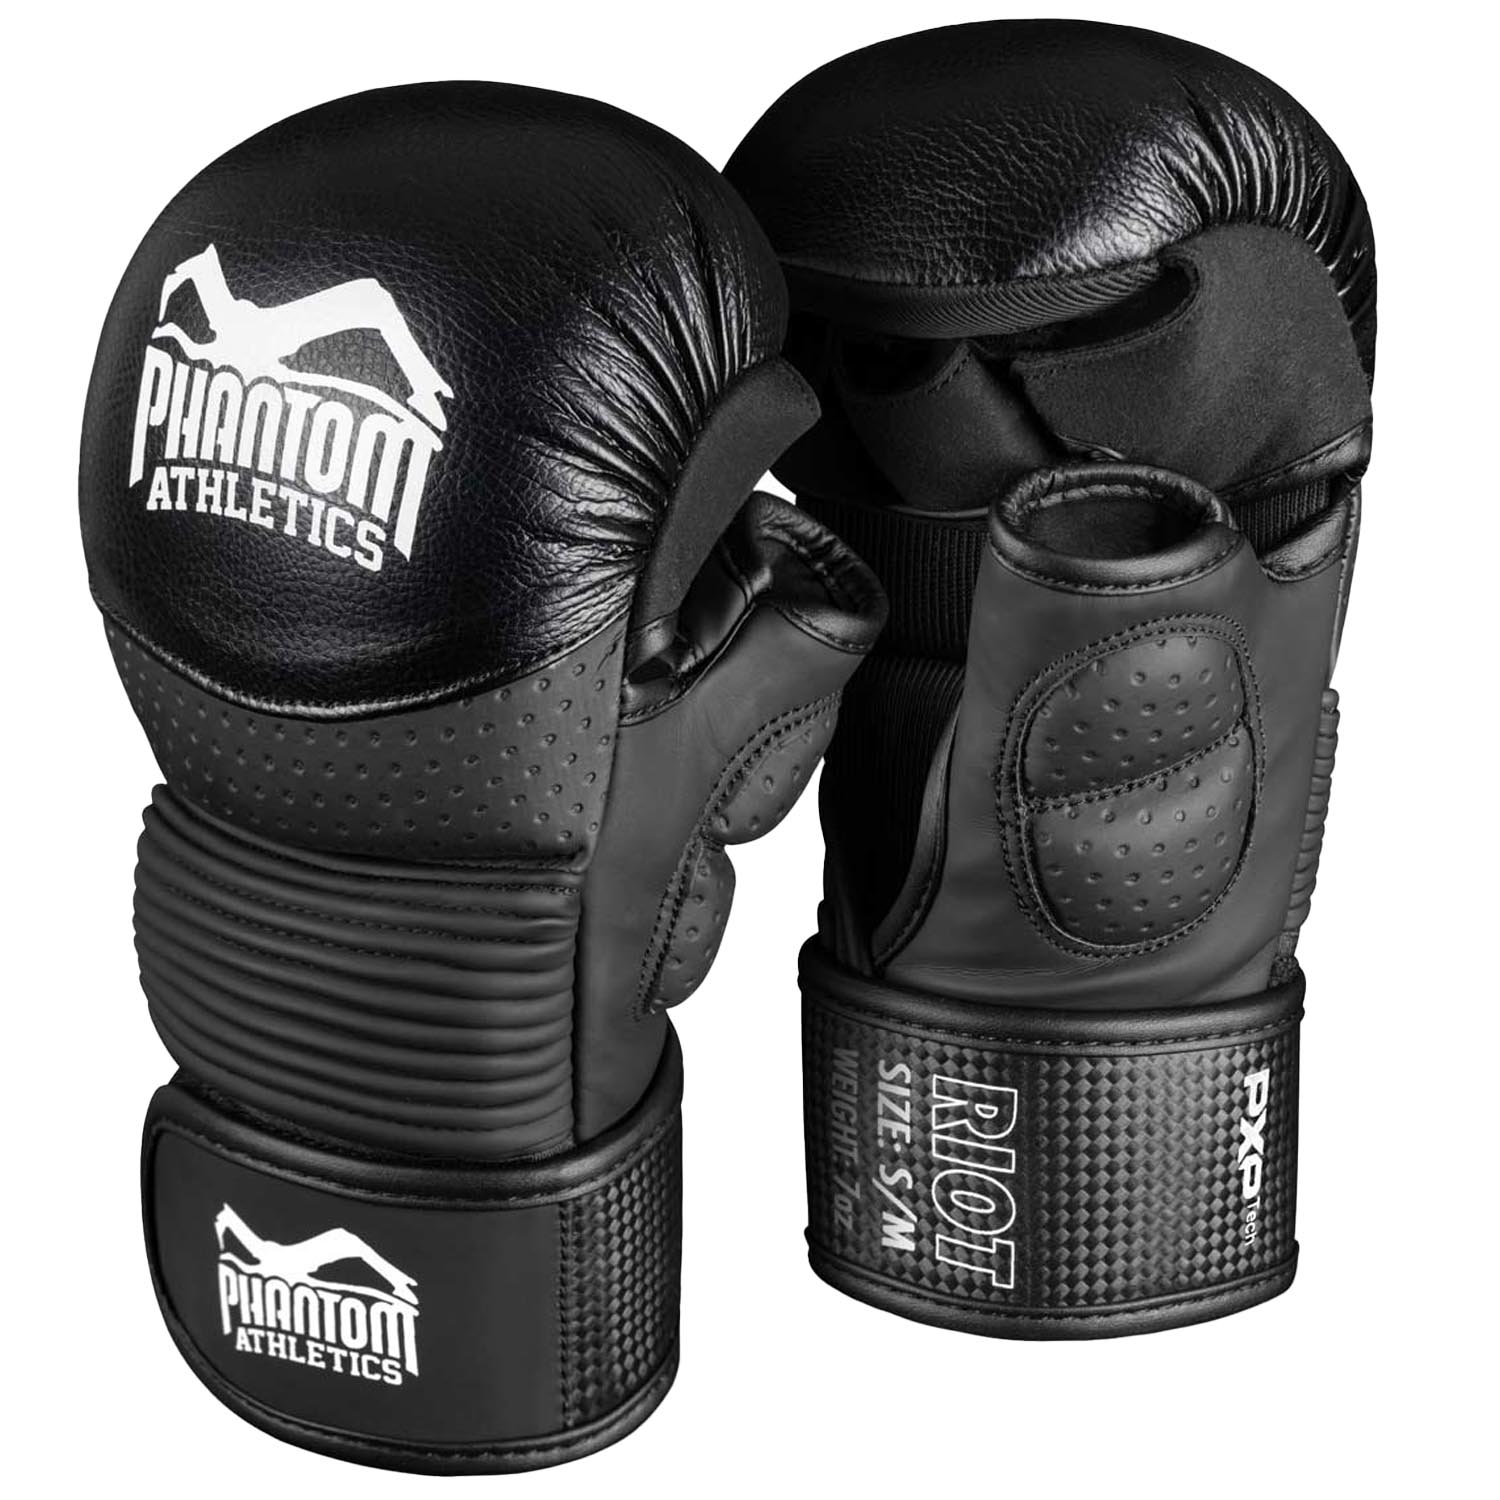 Phantom Athletics MMA Boxing Gloves, Riot Pro, black